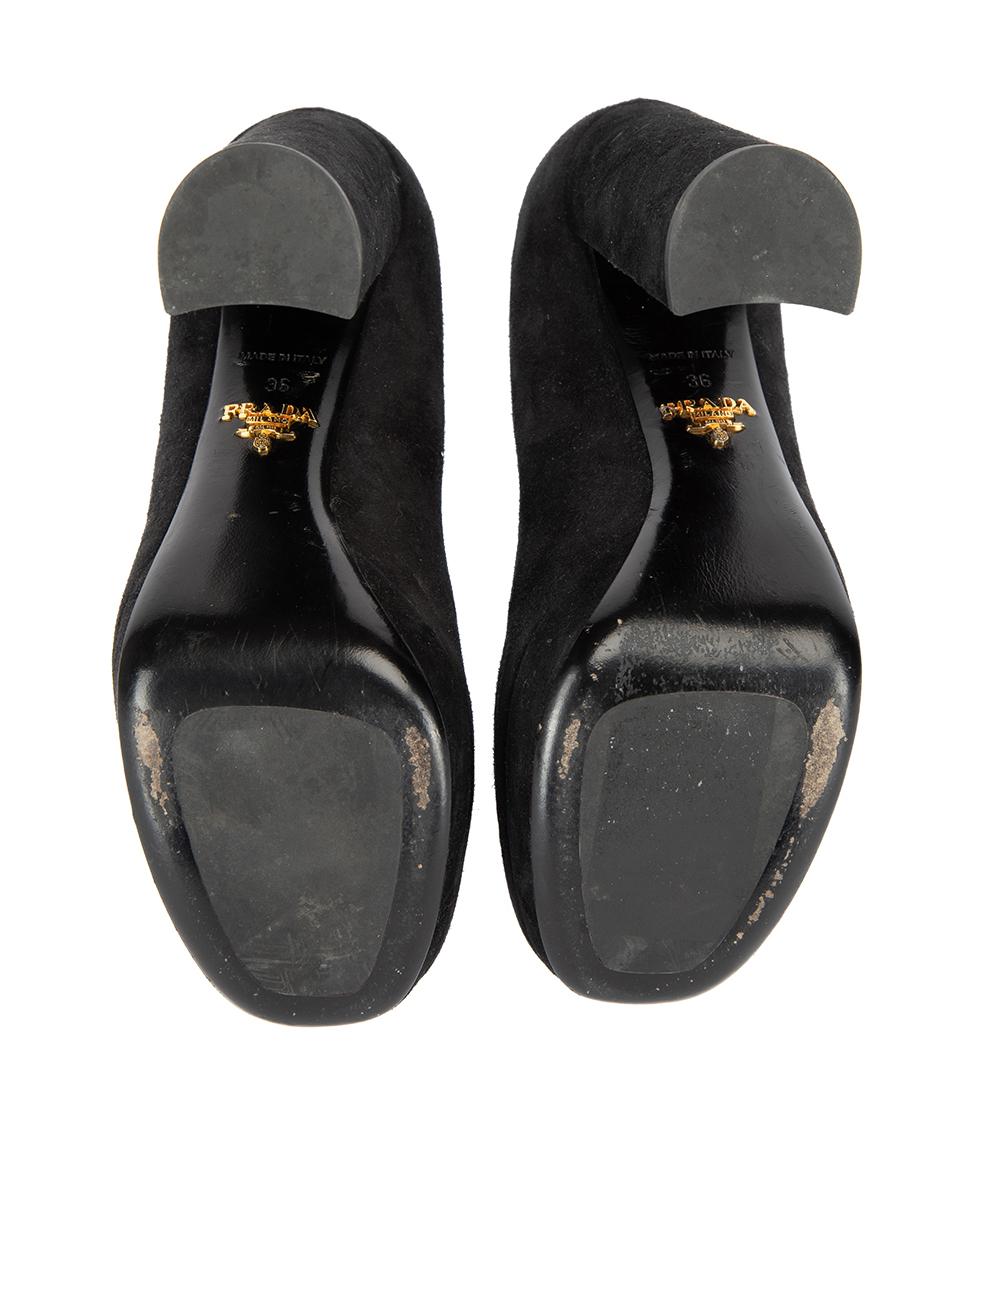 Prada Women's Black Suede Round Toe Platform Heels For Sale 1